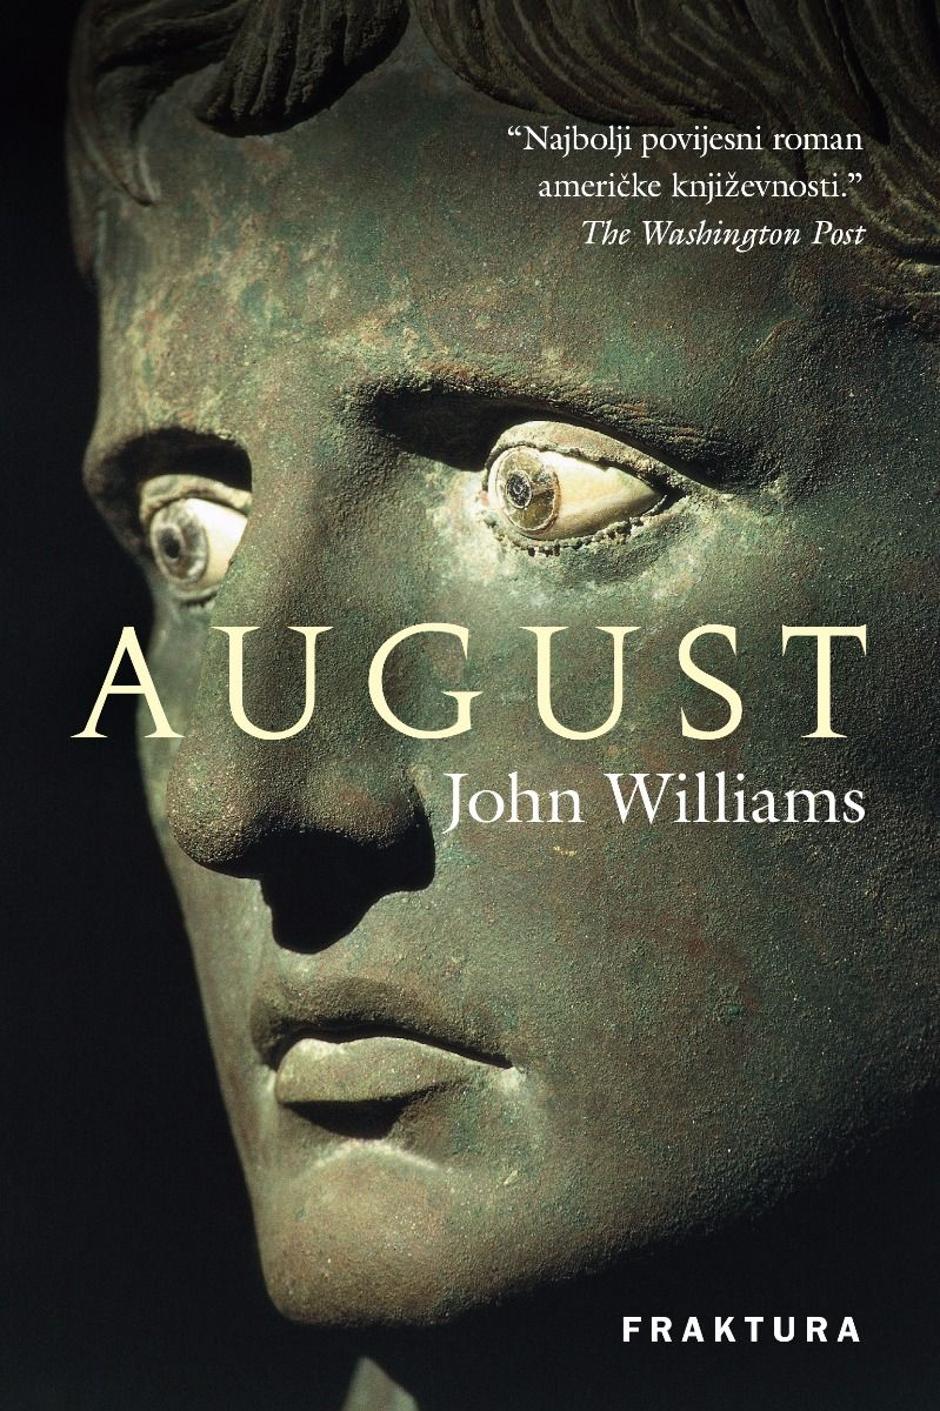 "August" | Author: Fraktura